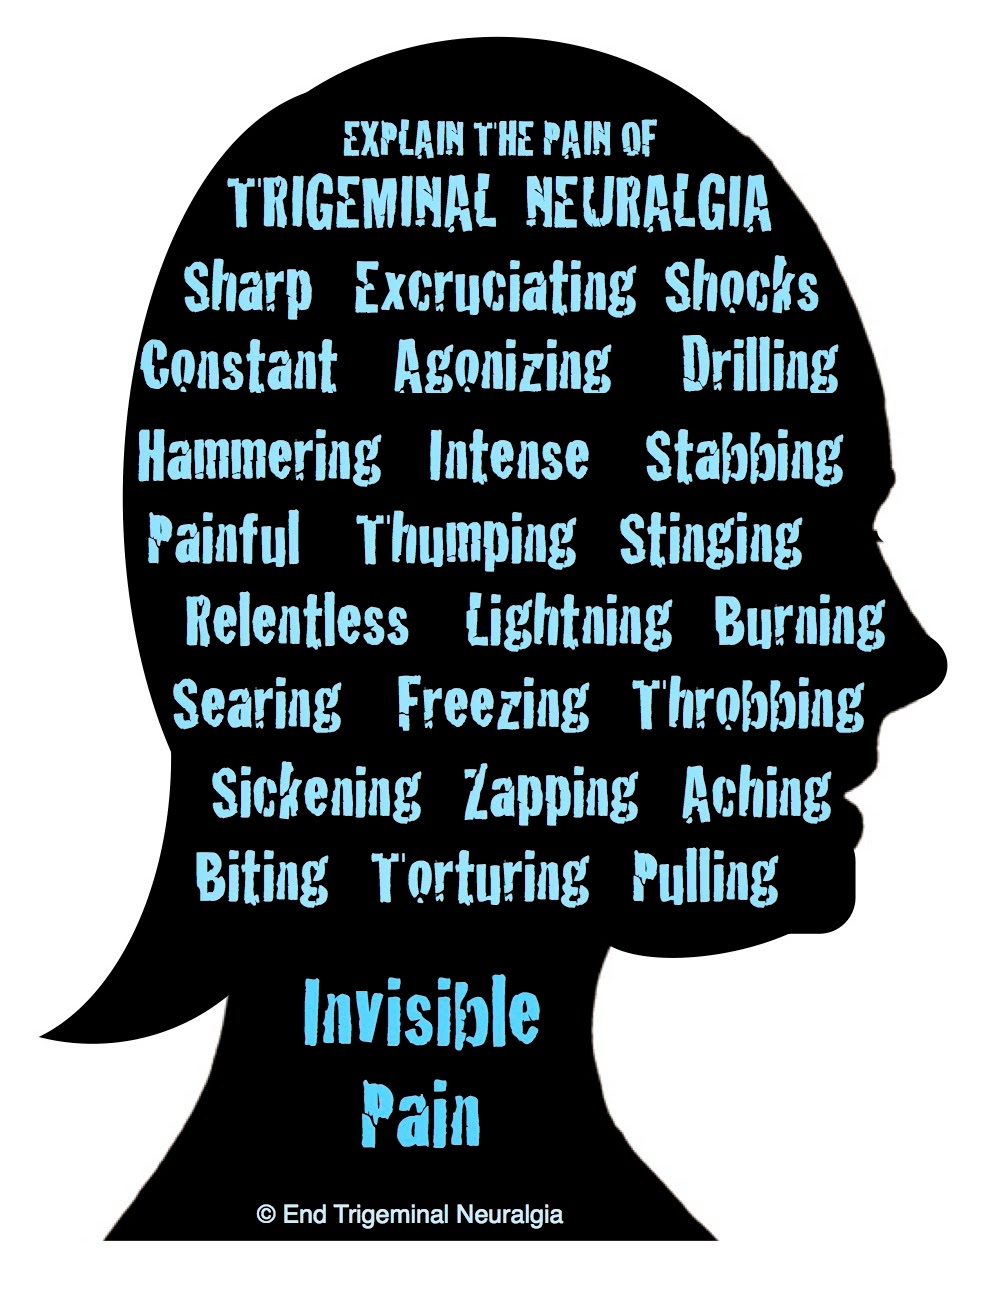 What is trigeminal neuralgia?